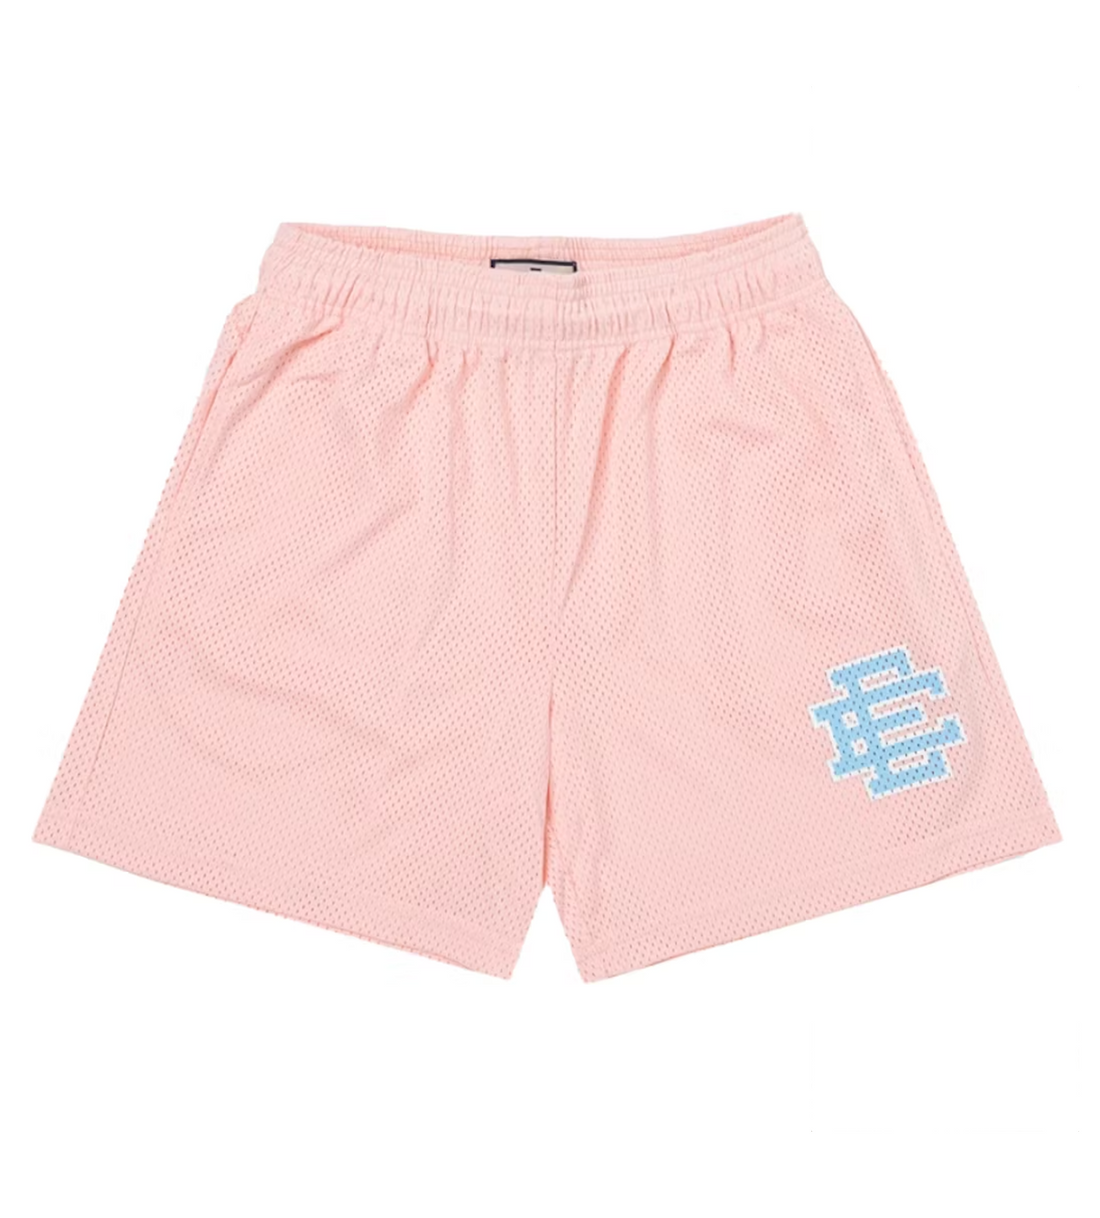 Eric Emanuel Pink White/Teal Shorts